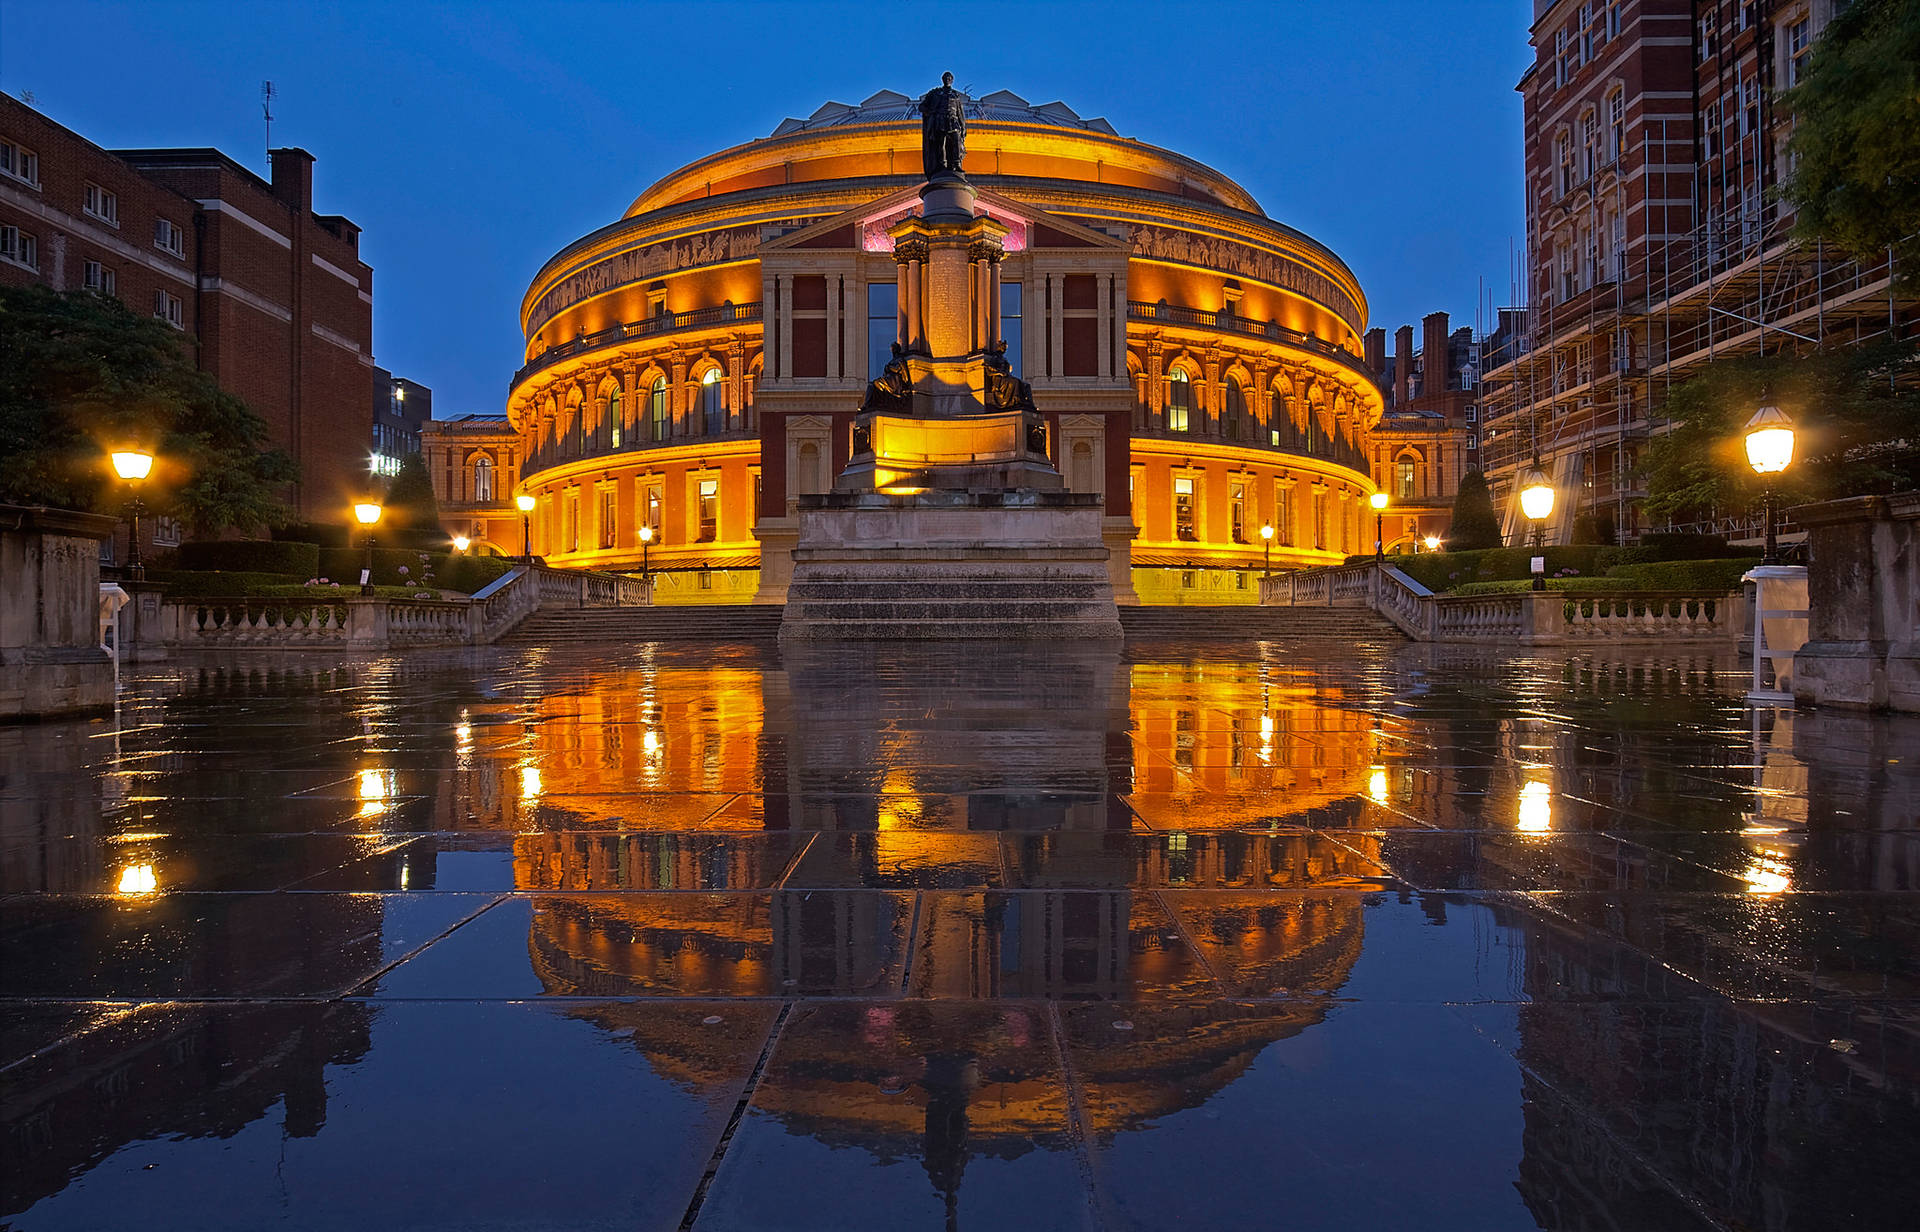 Royal Albert Hall England Picture